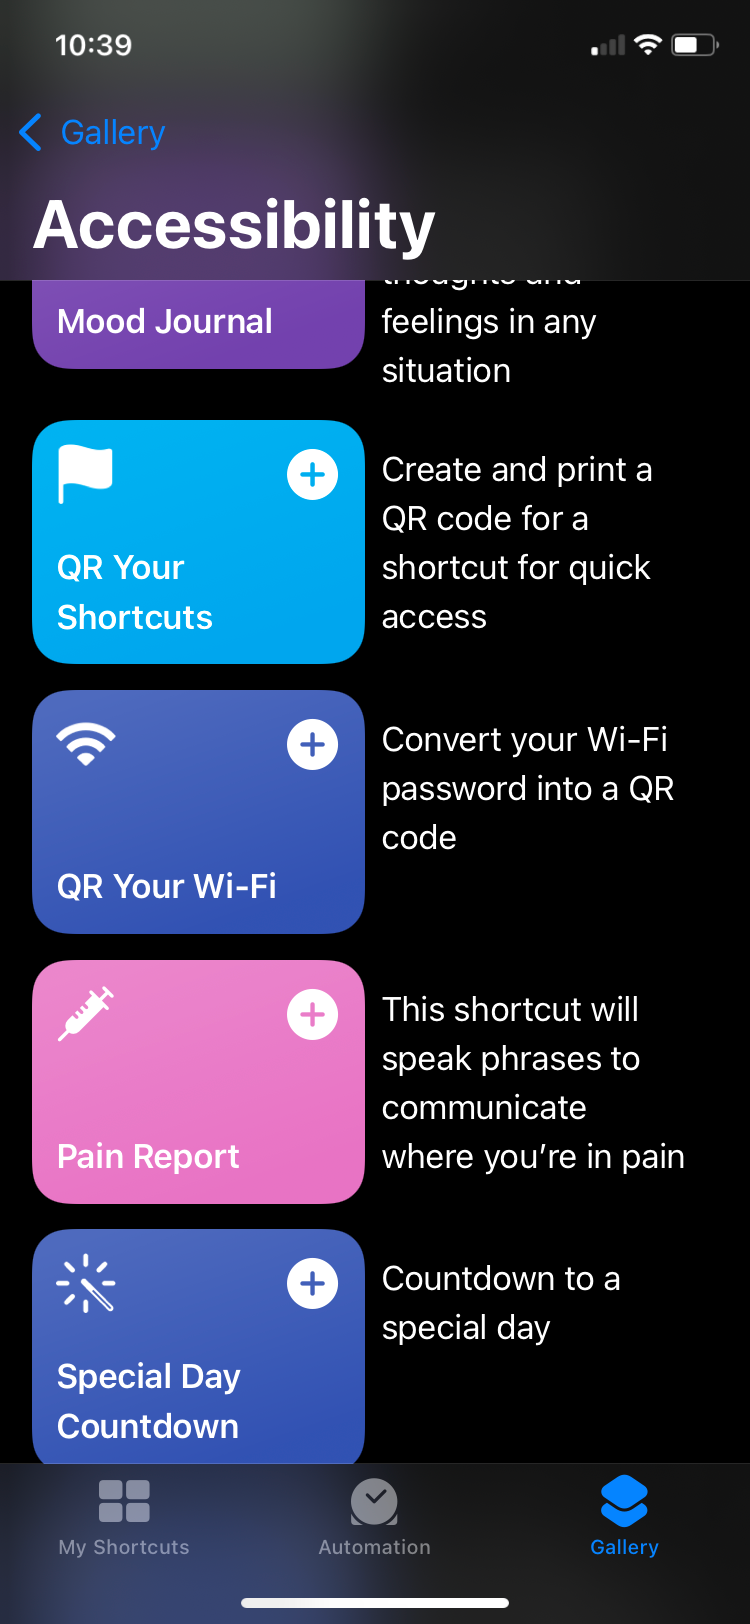 QR Your Wi Fi option